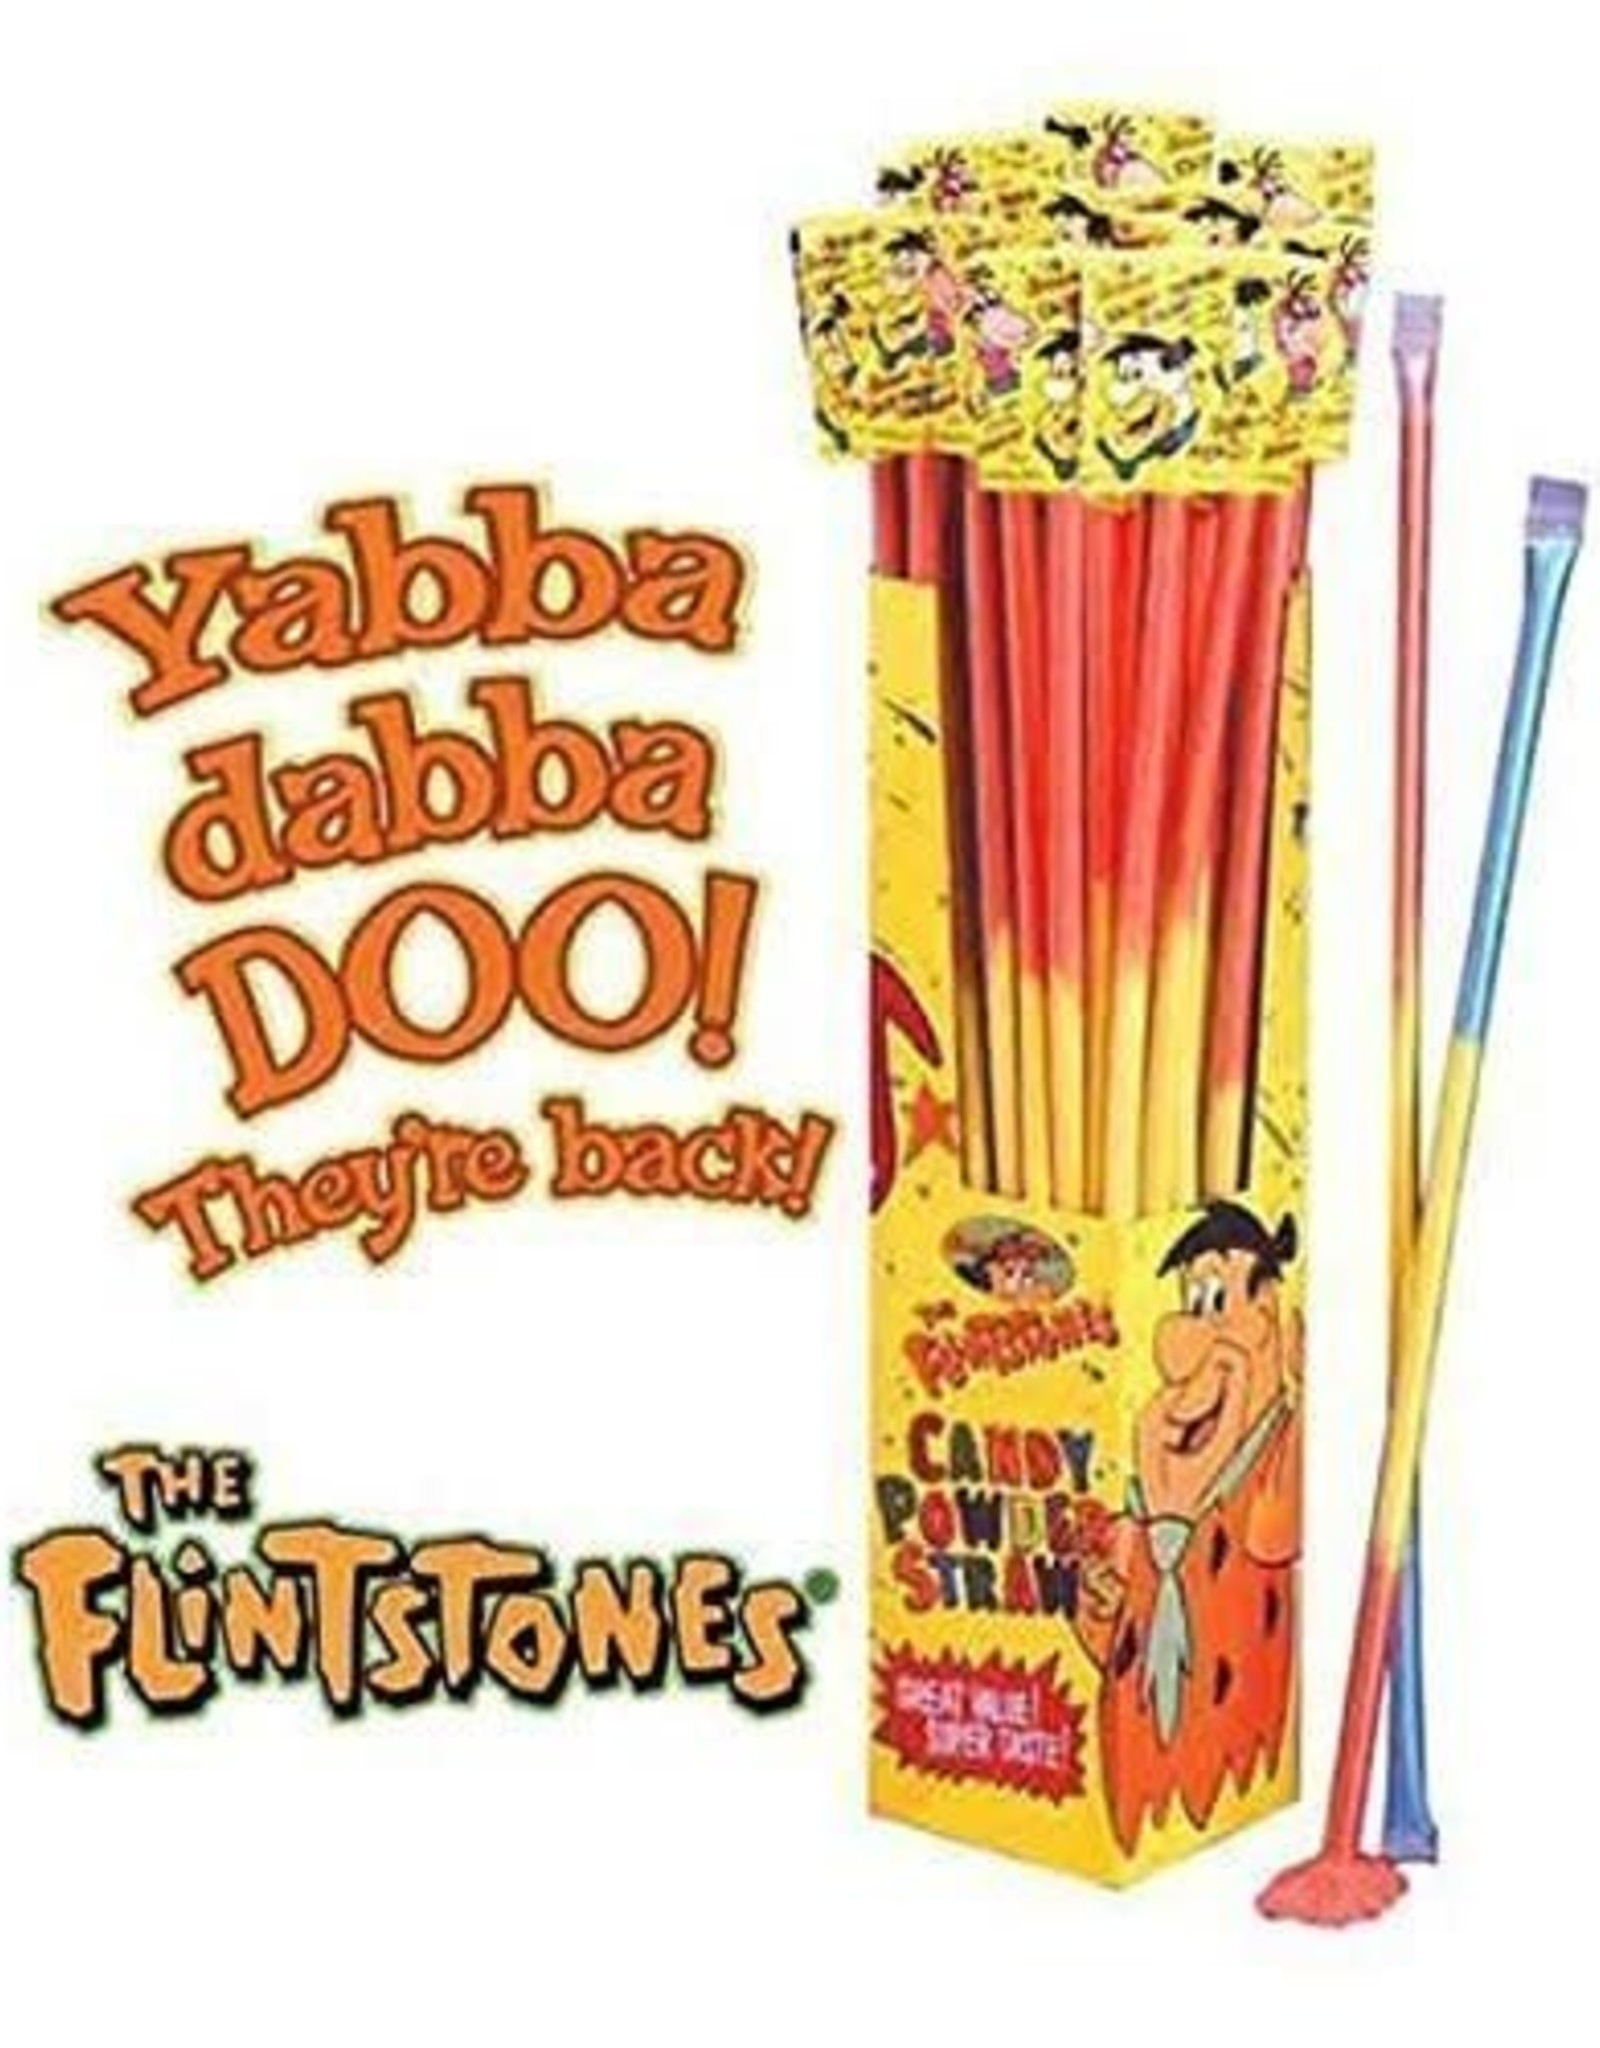 Black Cat Flintstones Candy Powder straws